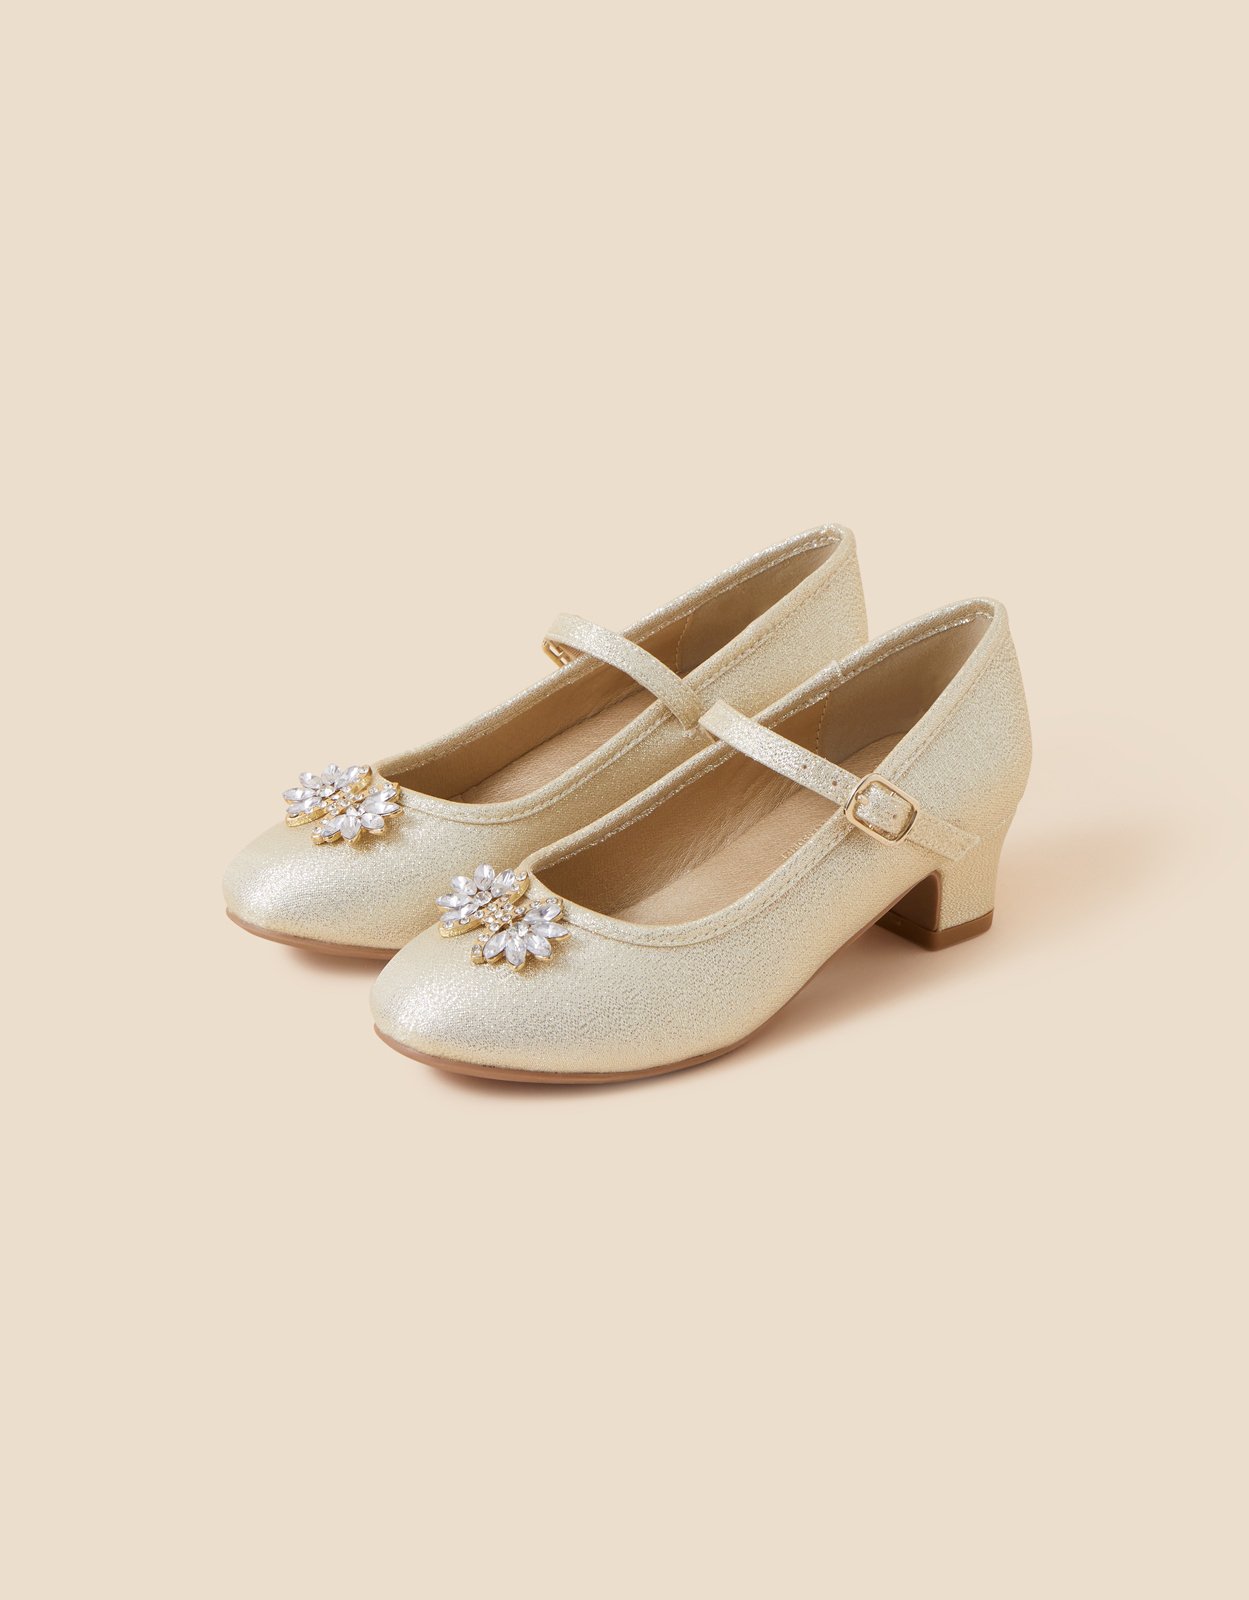 Accessorize Girl's Girls Shimmer Gem Flamenco Shoes Gold, Size: 4